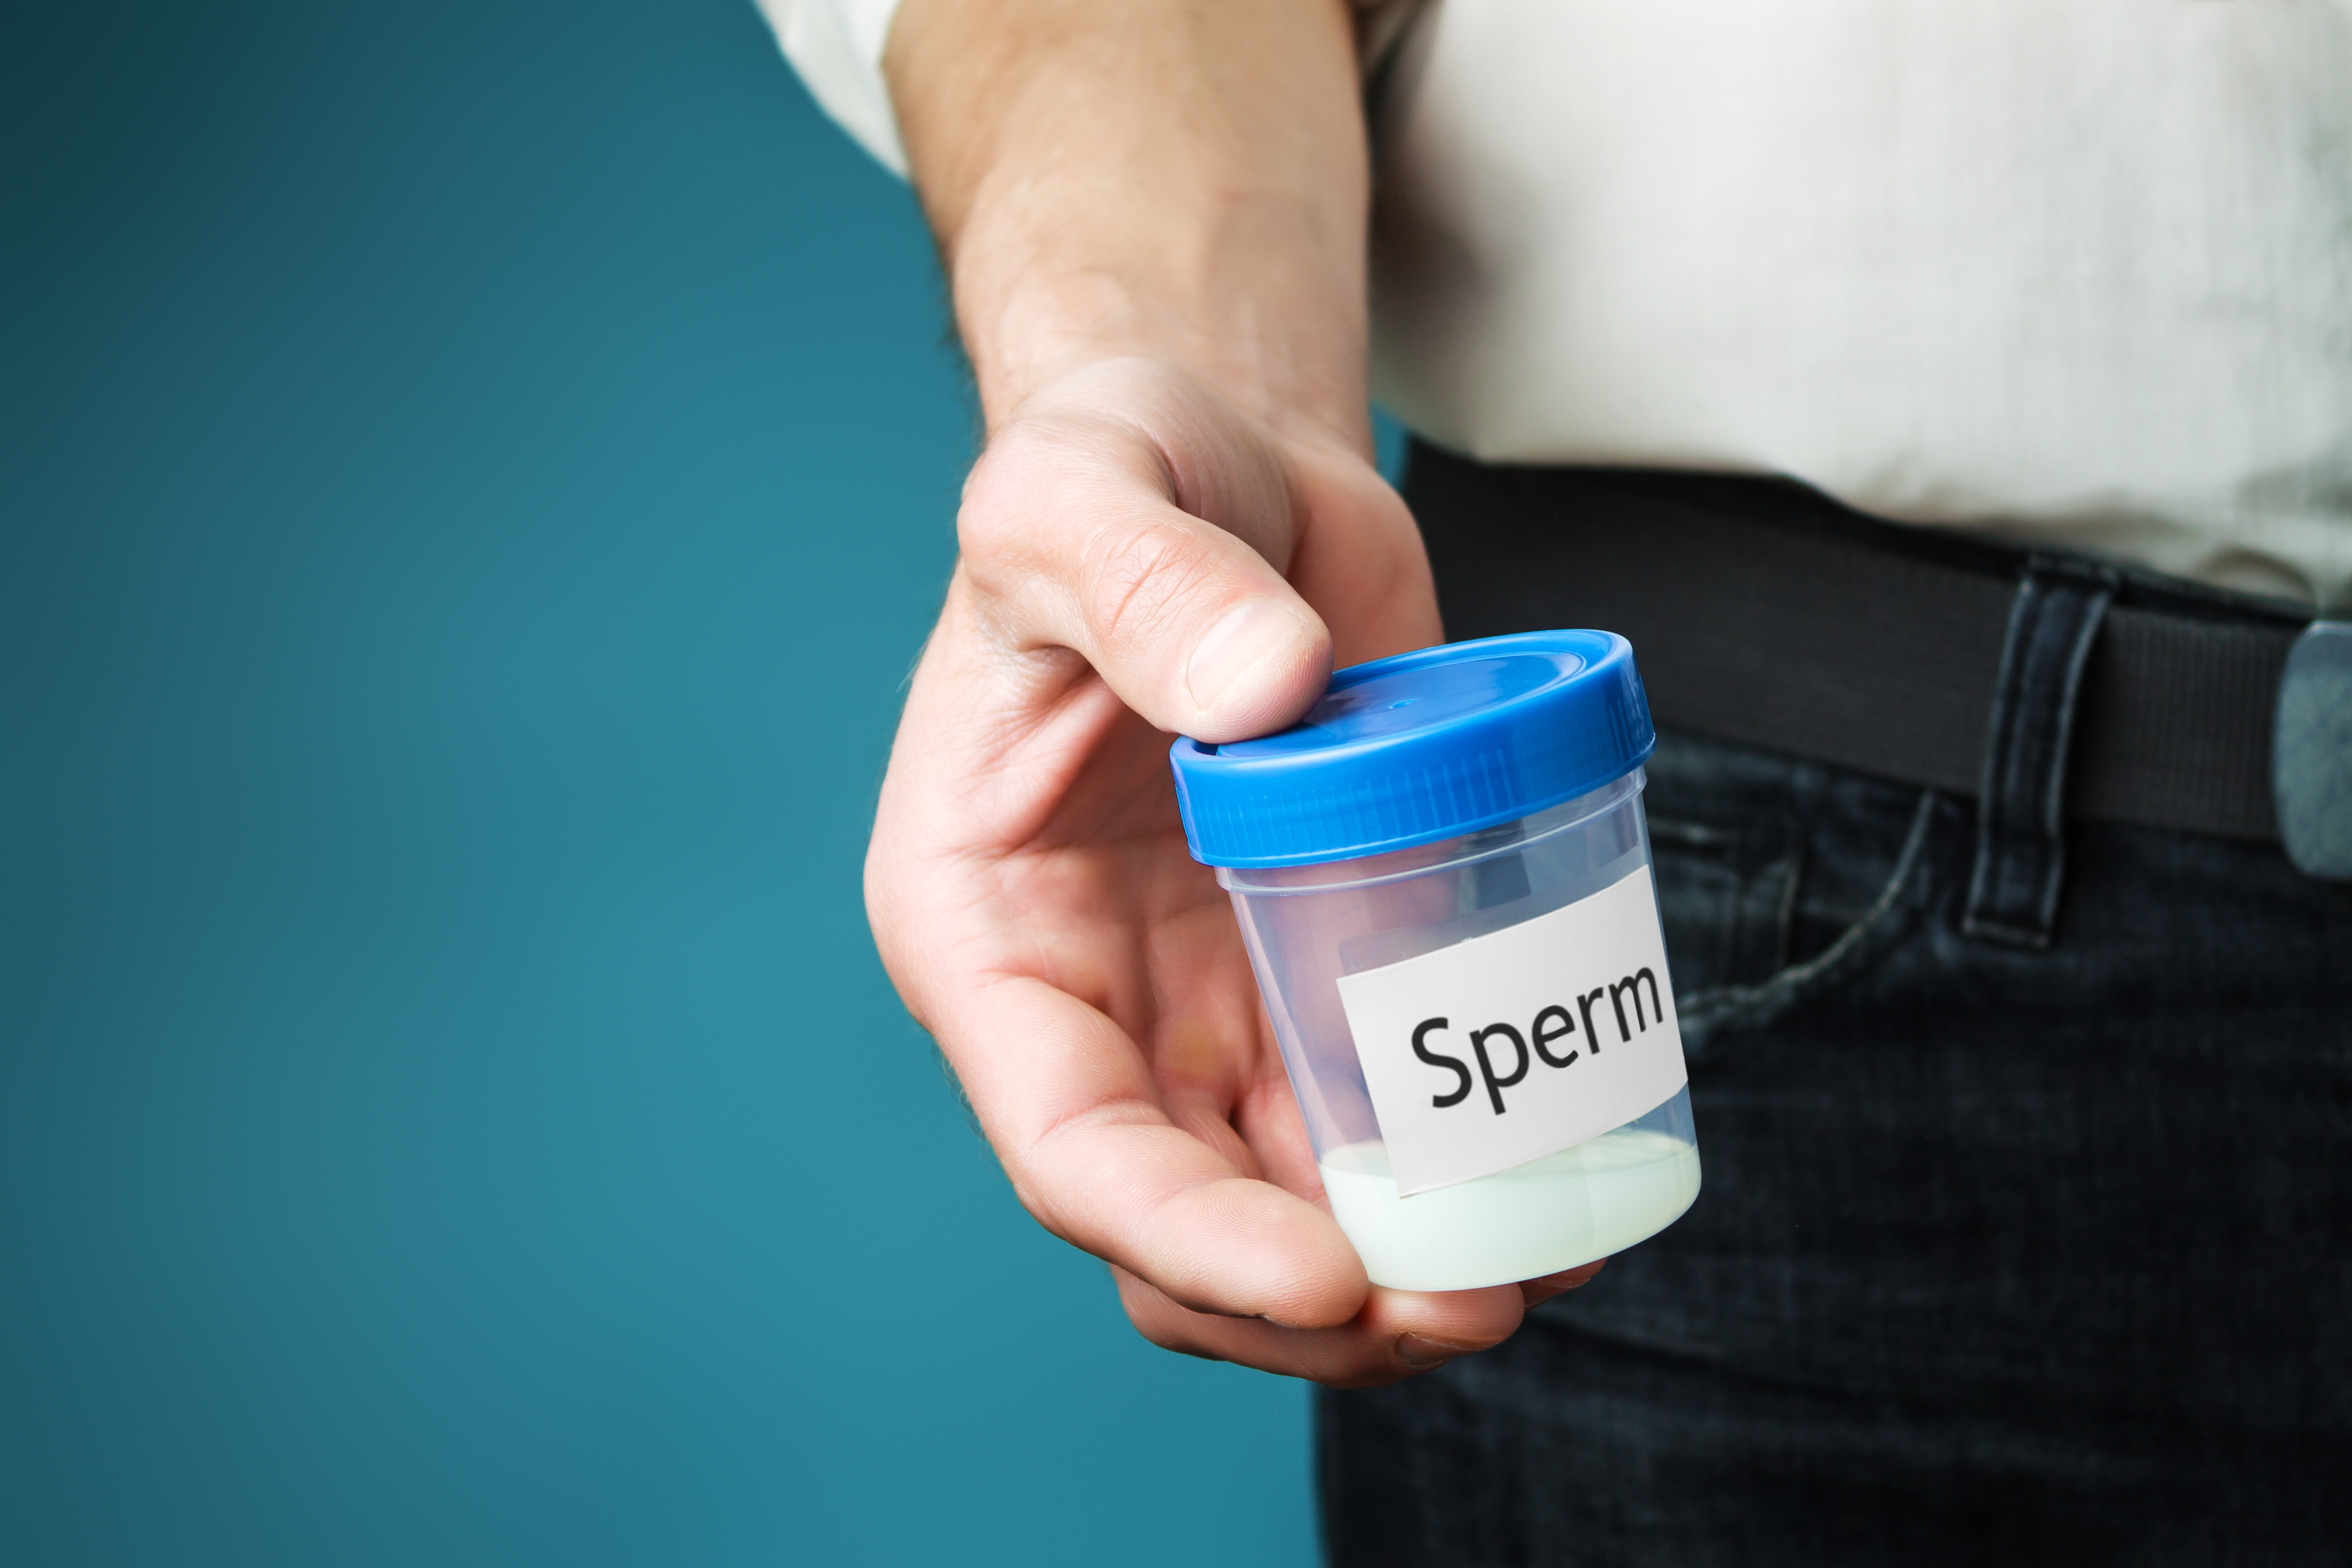 Male Infertility Testing With Spermcheck Fertility Test